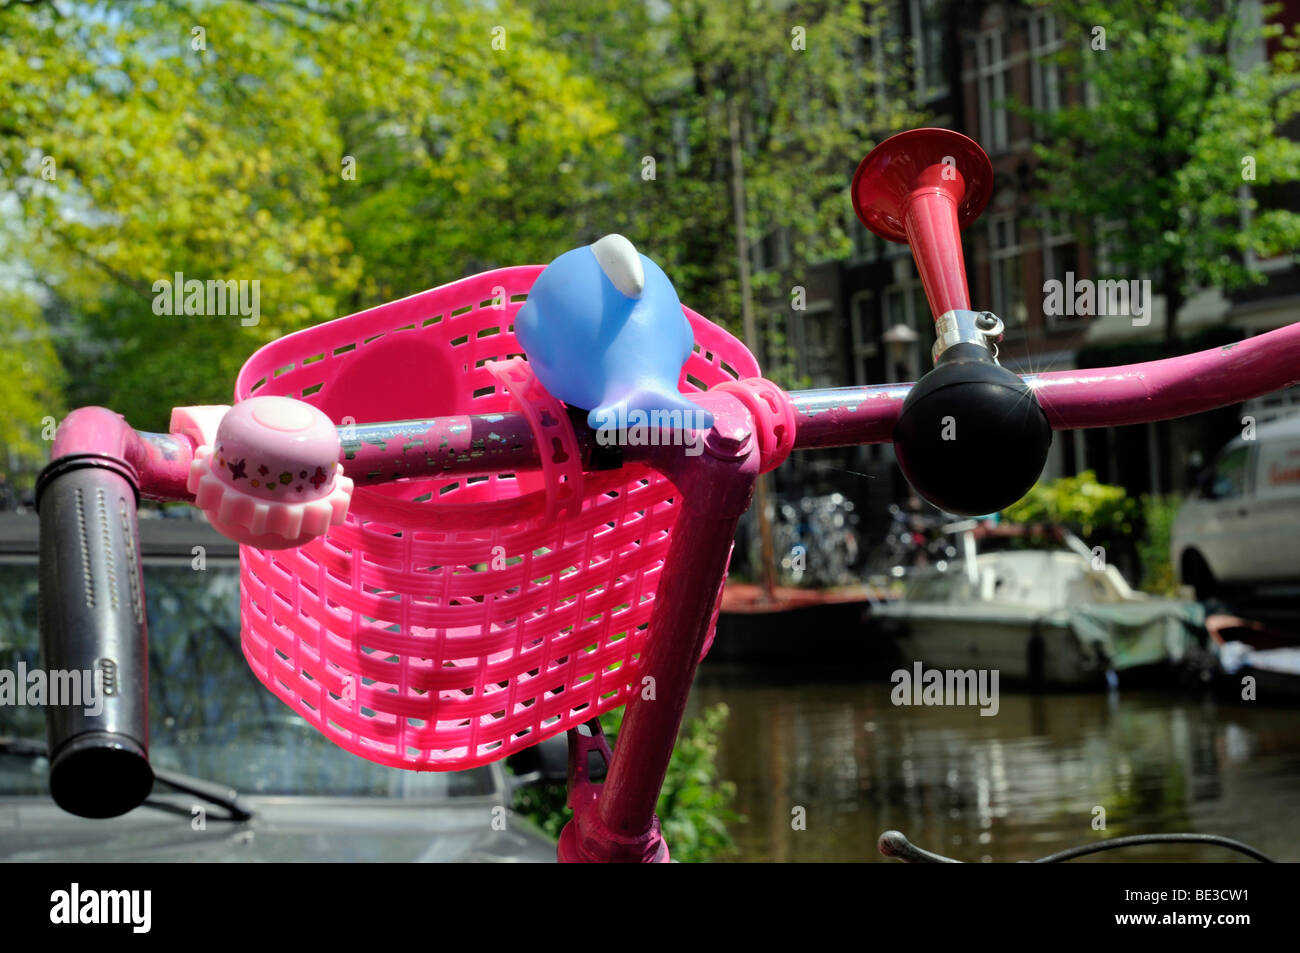 Decorated bicycle, Amsterdam, Netherlands, Europe Stock Photo